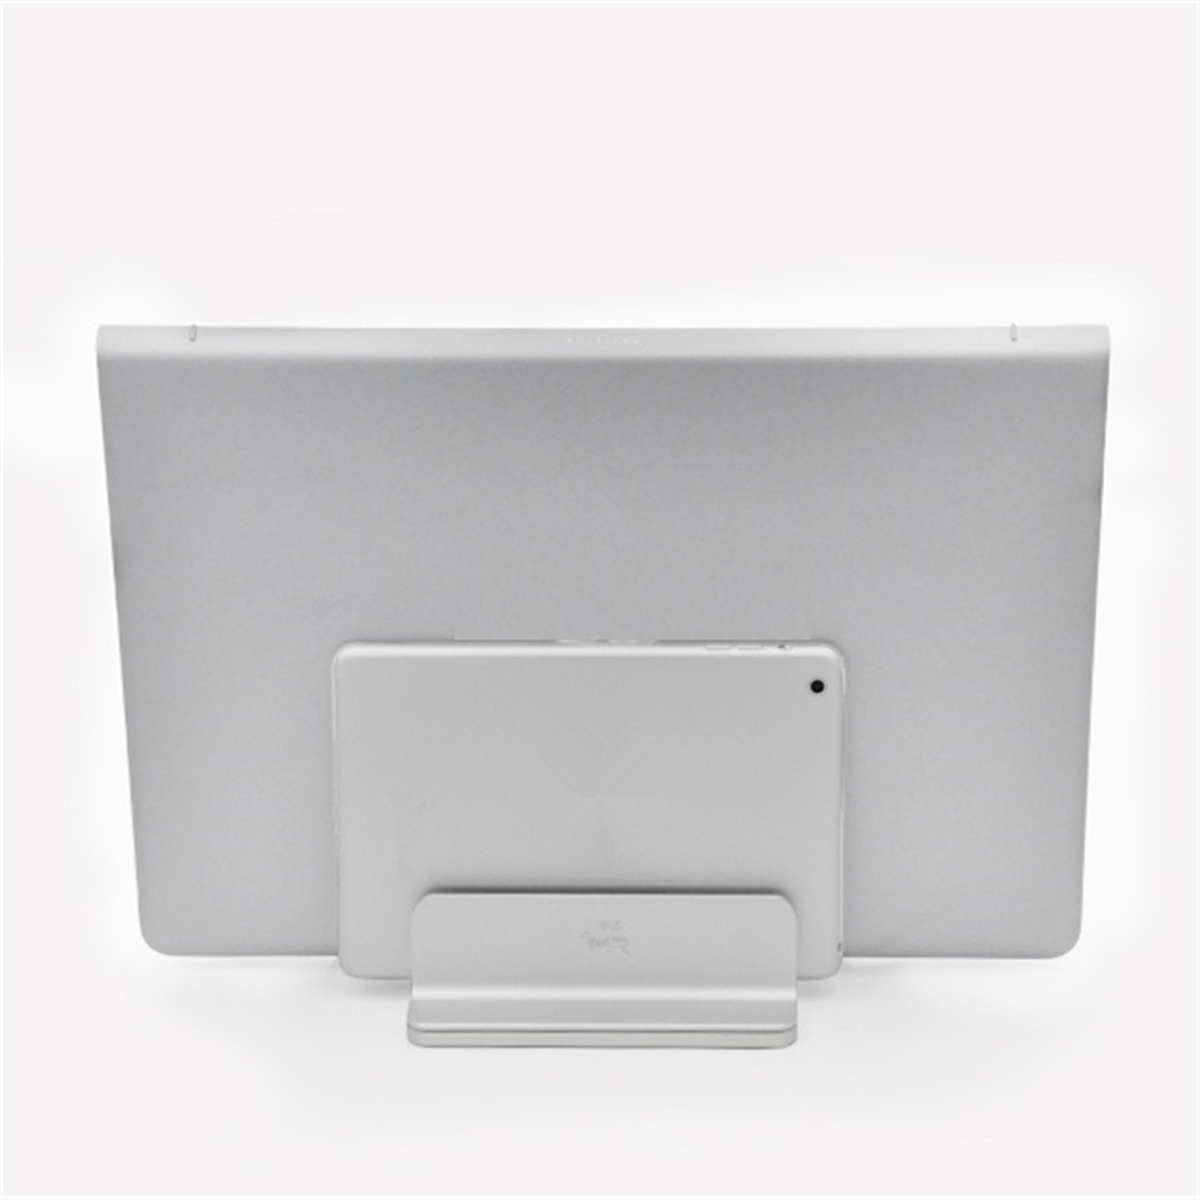 Adjustable-Vertical-Laptop-Stand-Space-saving-Desktop-Holder-For-Laptop-Notebook-MacBook-1383373-7